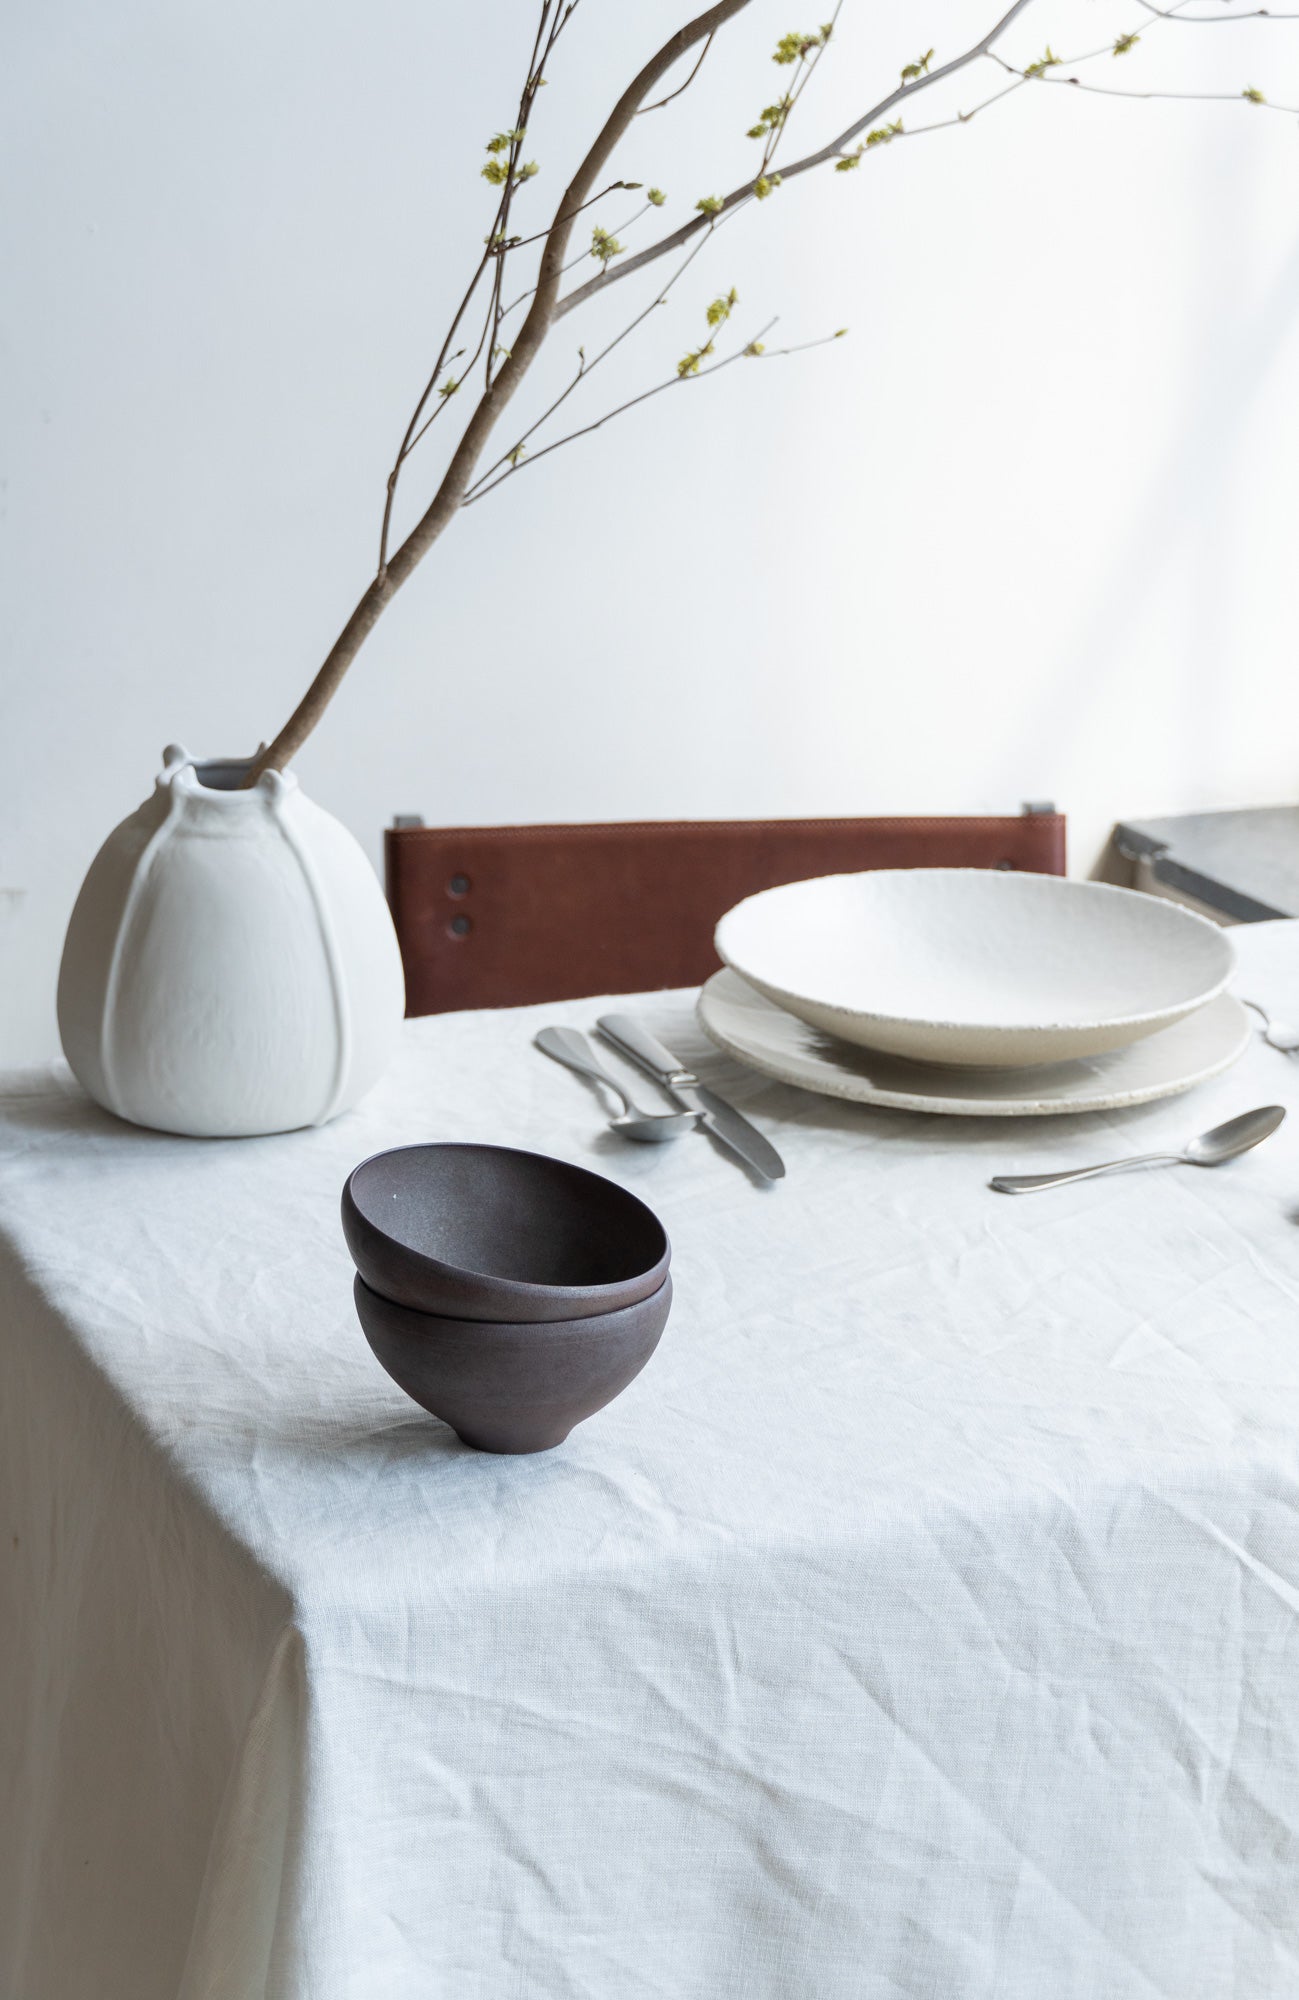 black ceramic bowls by Bonni Bonne on a white linen table setting